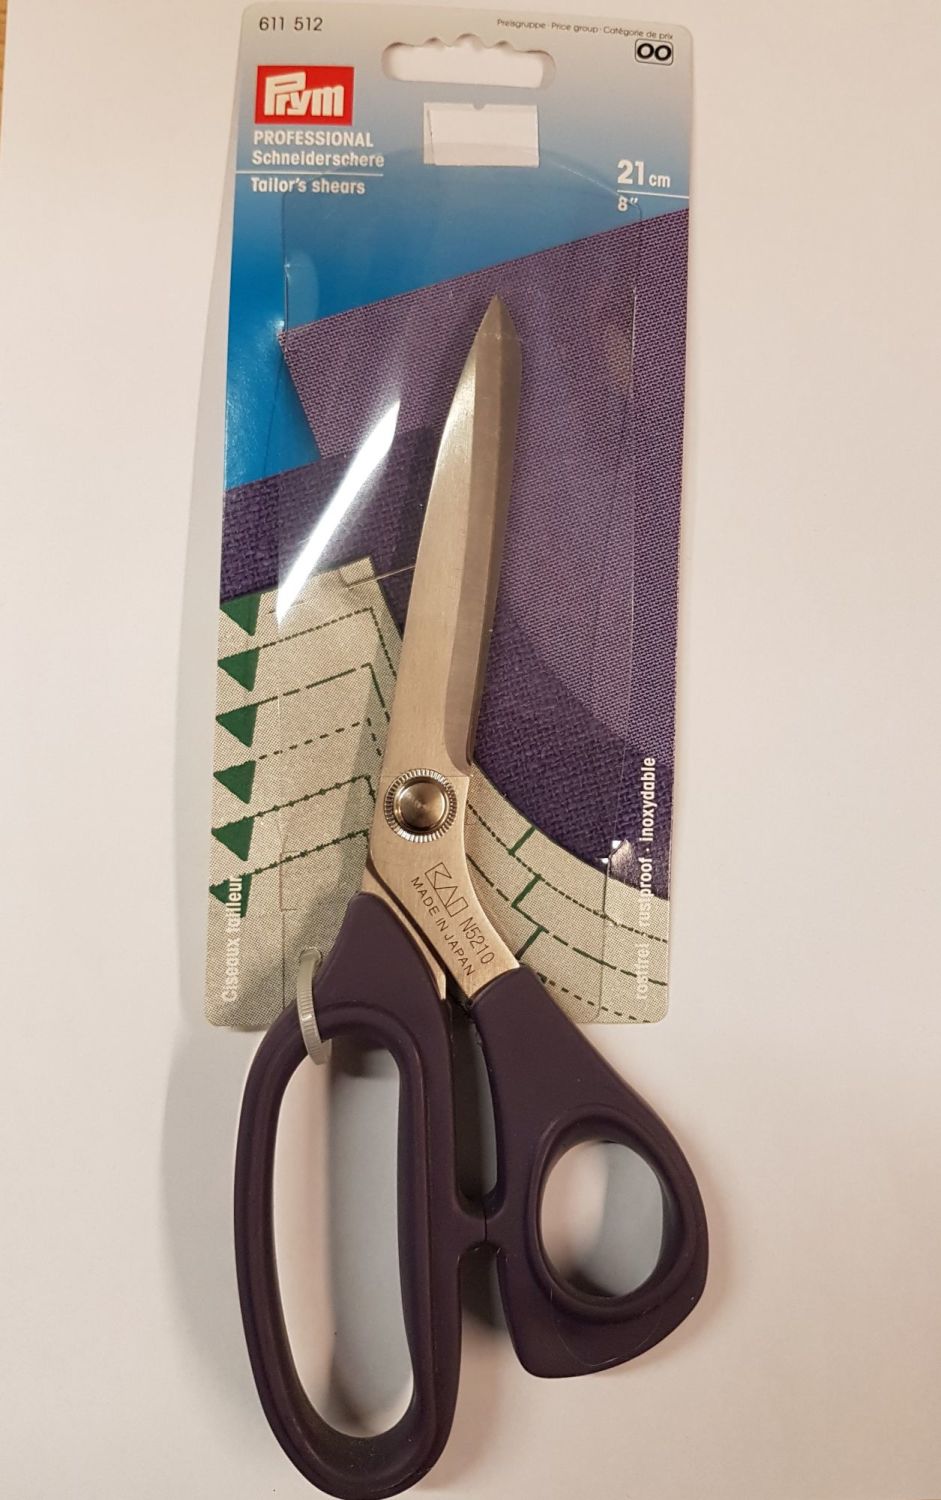 Prym 611-512 Dressmaking scissors 8